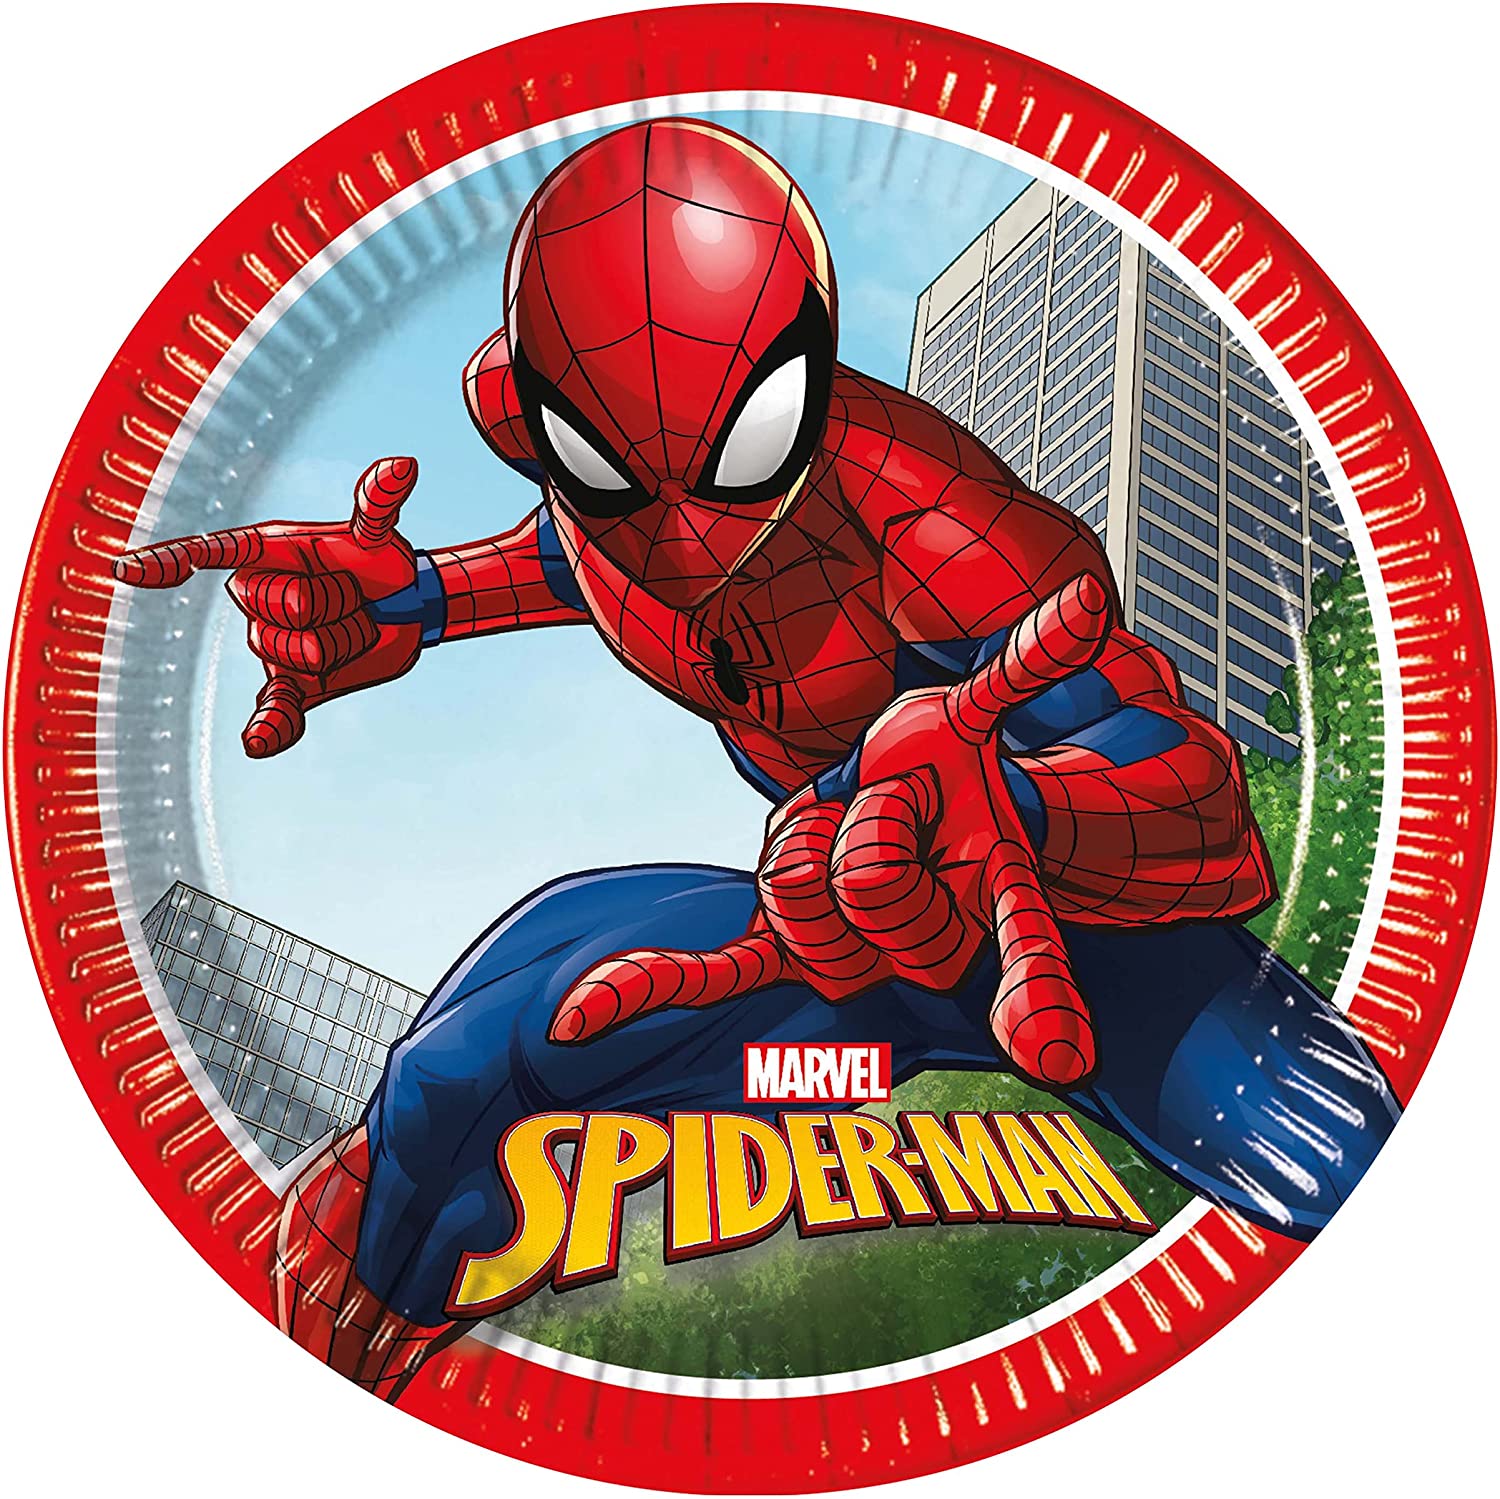 Spiderman - Plates